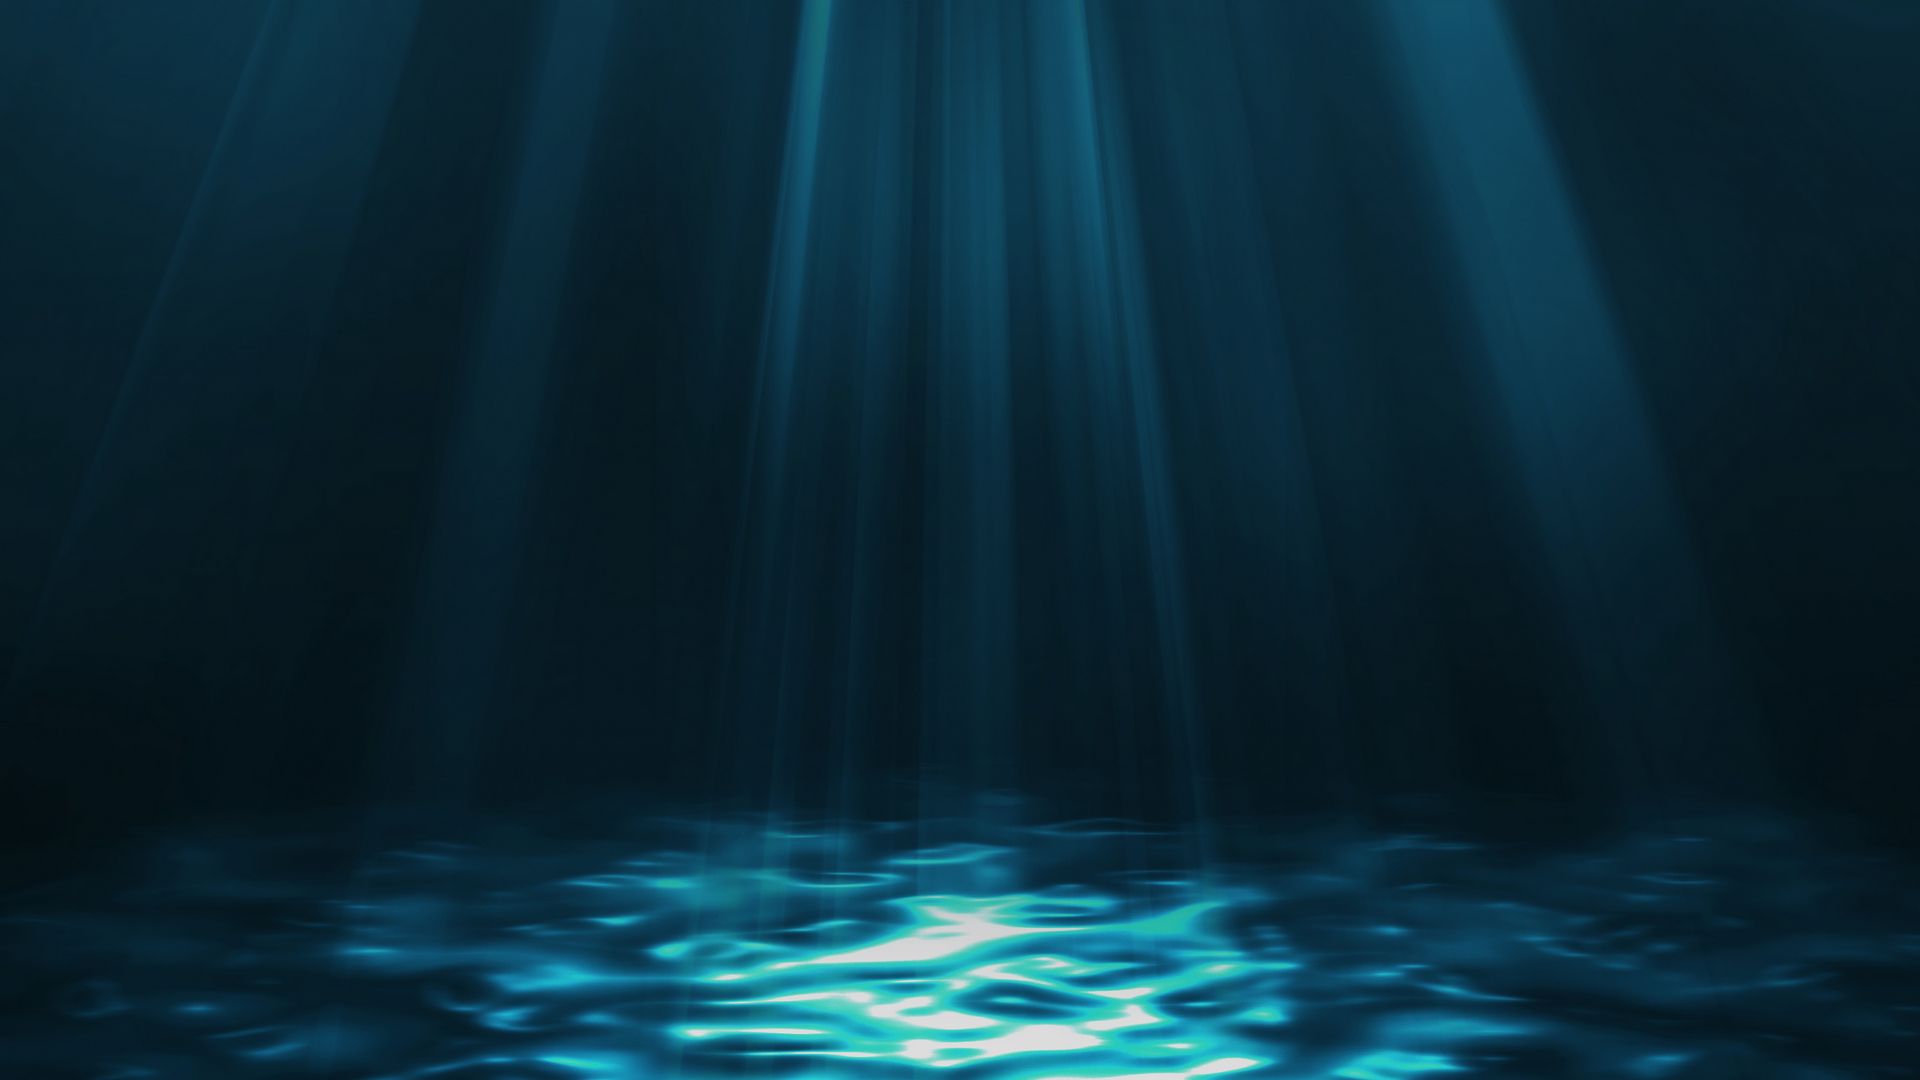 Download wallpaper 1920x1080 underwater world, rays, art, water, light full  hd, hdtv, fhd, 1080p hd background